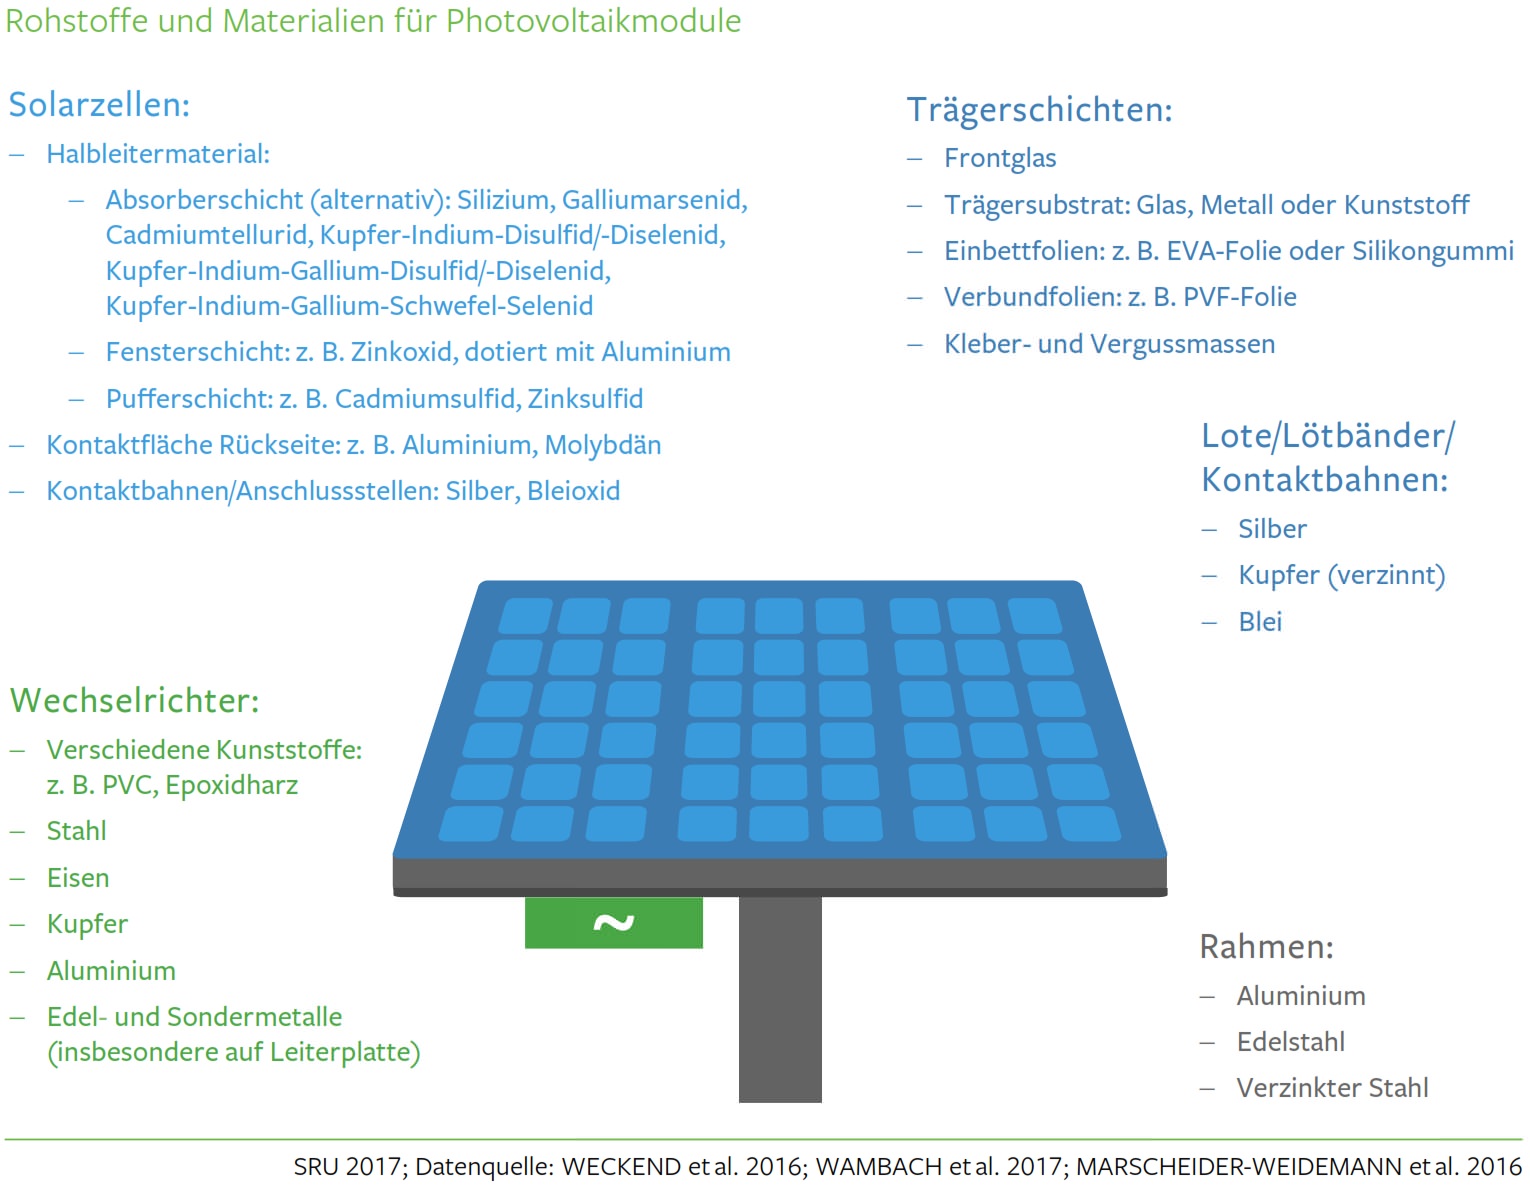 rohstoffe materialien photovoltaikmodule